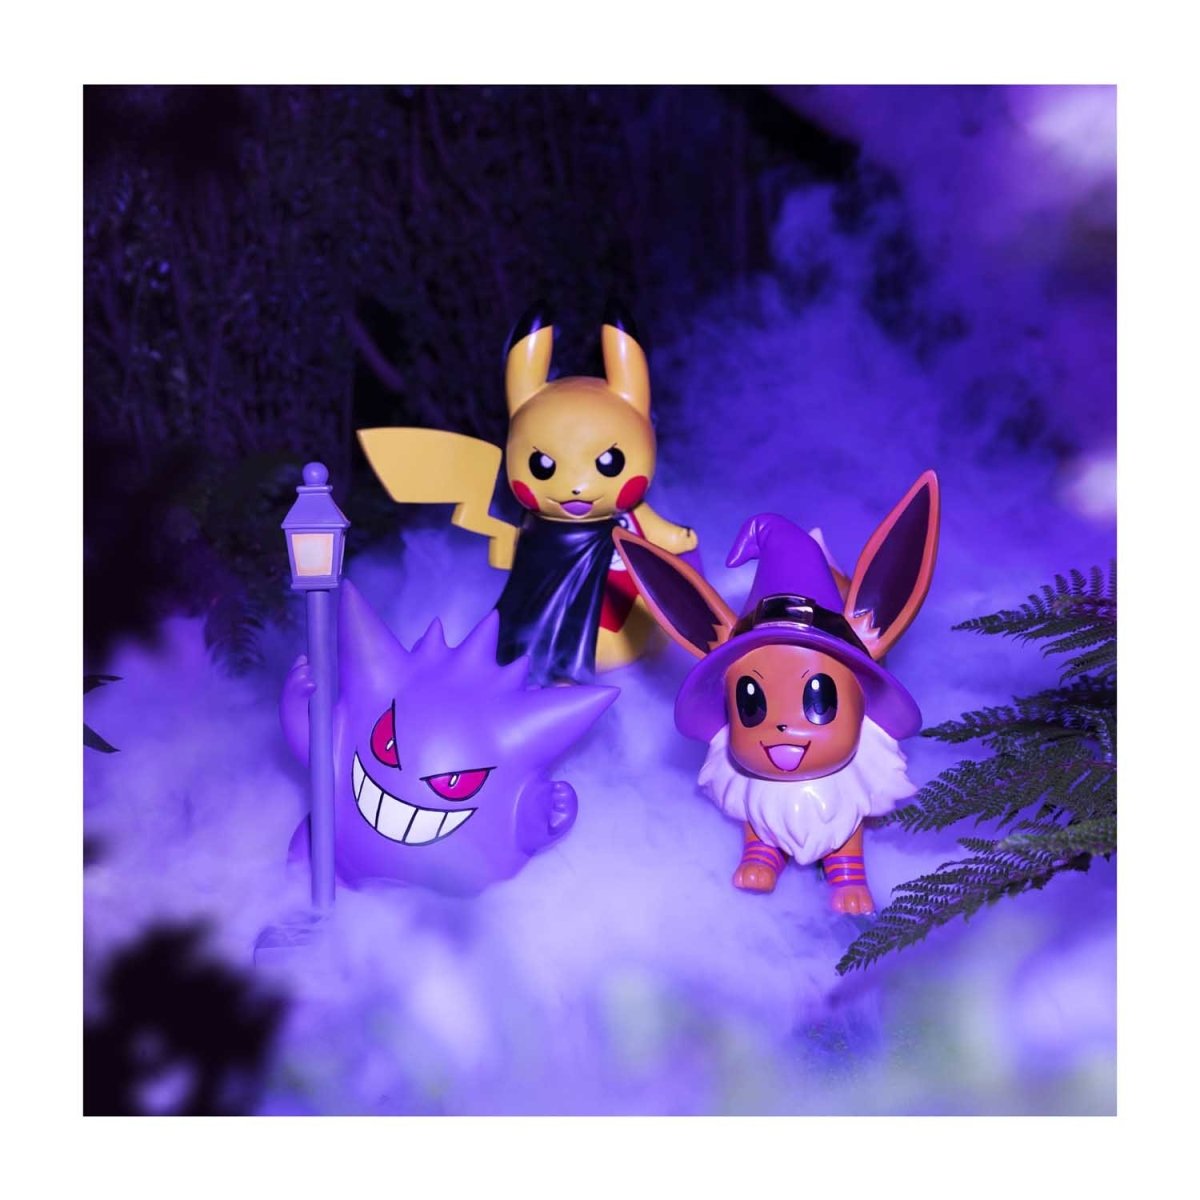 Full odds wild shiny Gengar 👻✨😈 #gengar #pokemon #pikachu #pok